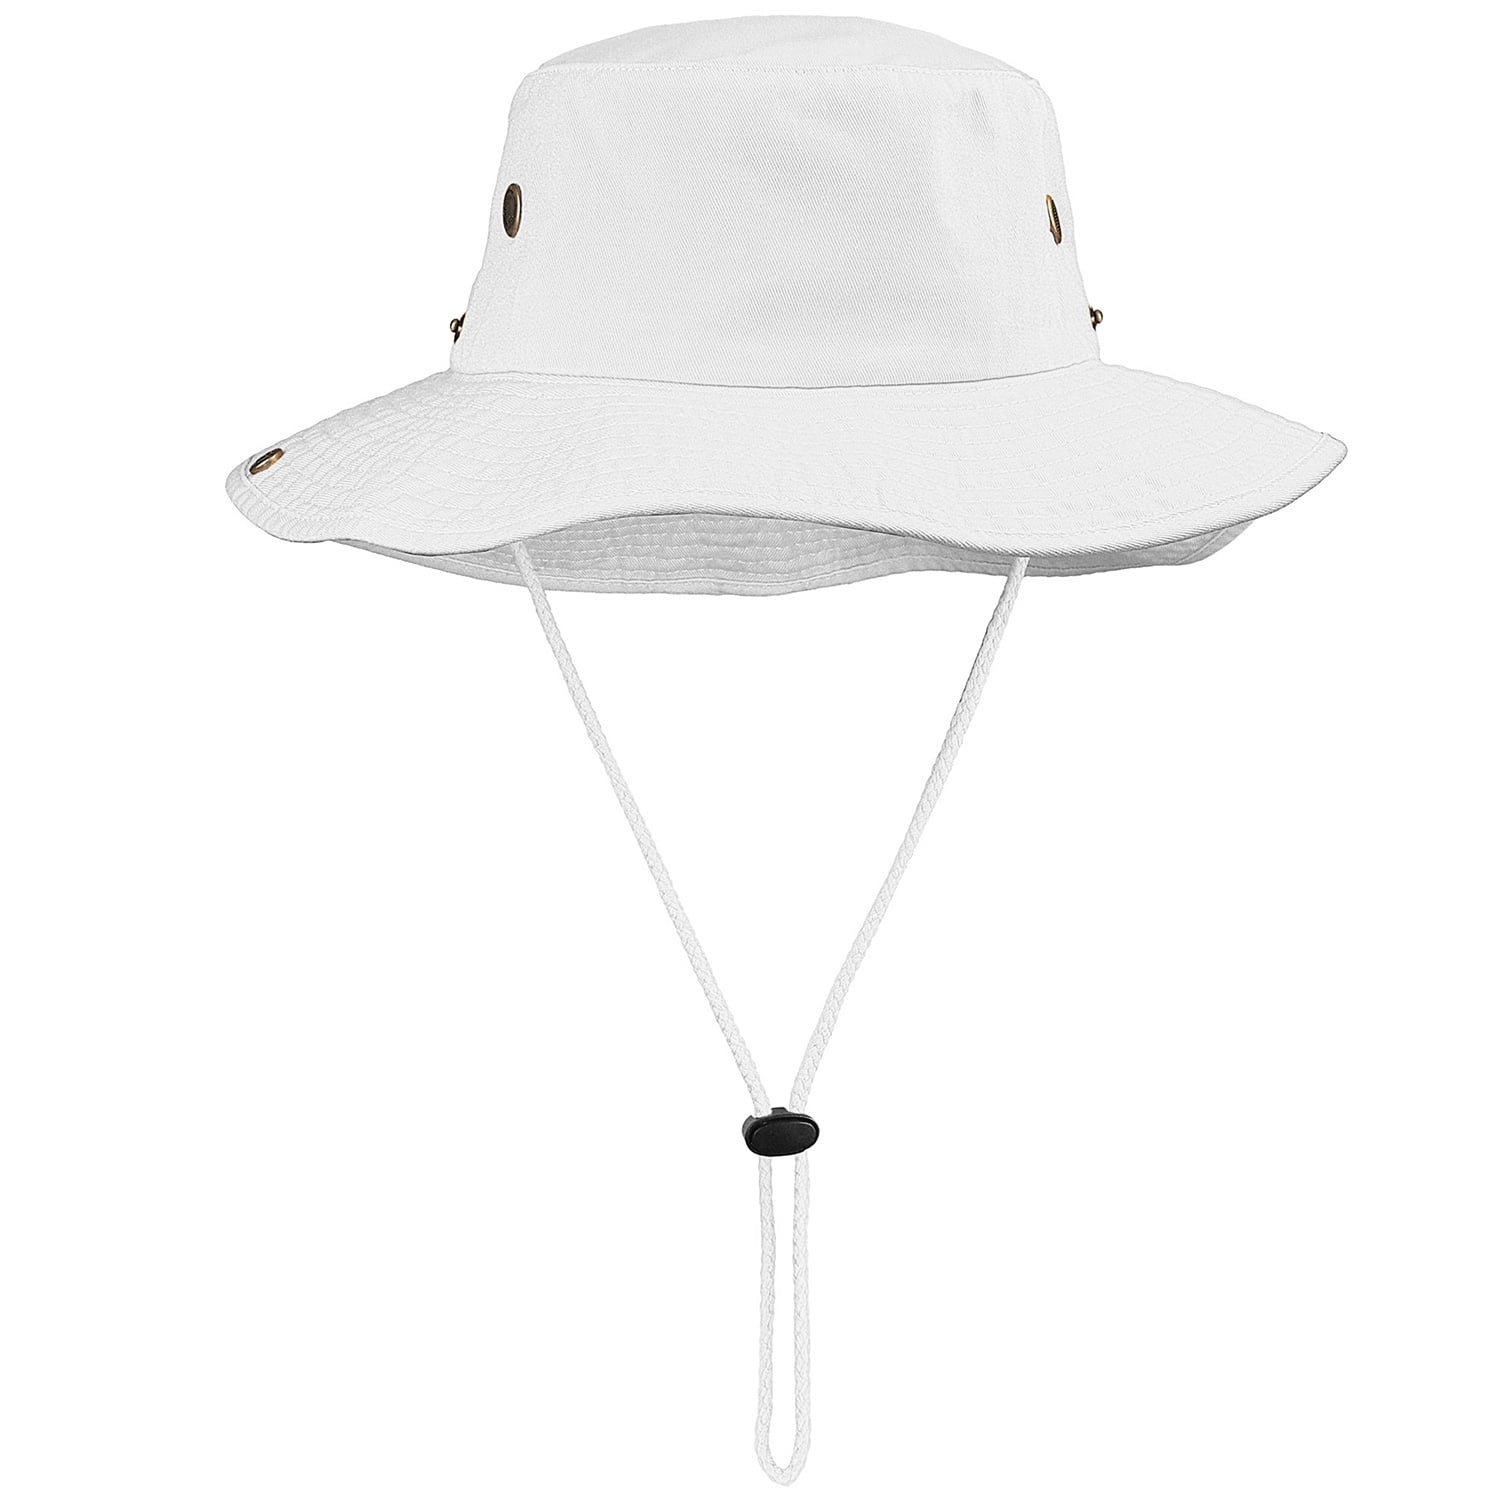 Falari Wide Brim Hiking Fishing Safari Boonie Bucket Hats 100% Cotton UV Sun Protection for Men Women Outdoor Activities L/XL White, adult Unisex